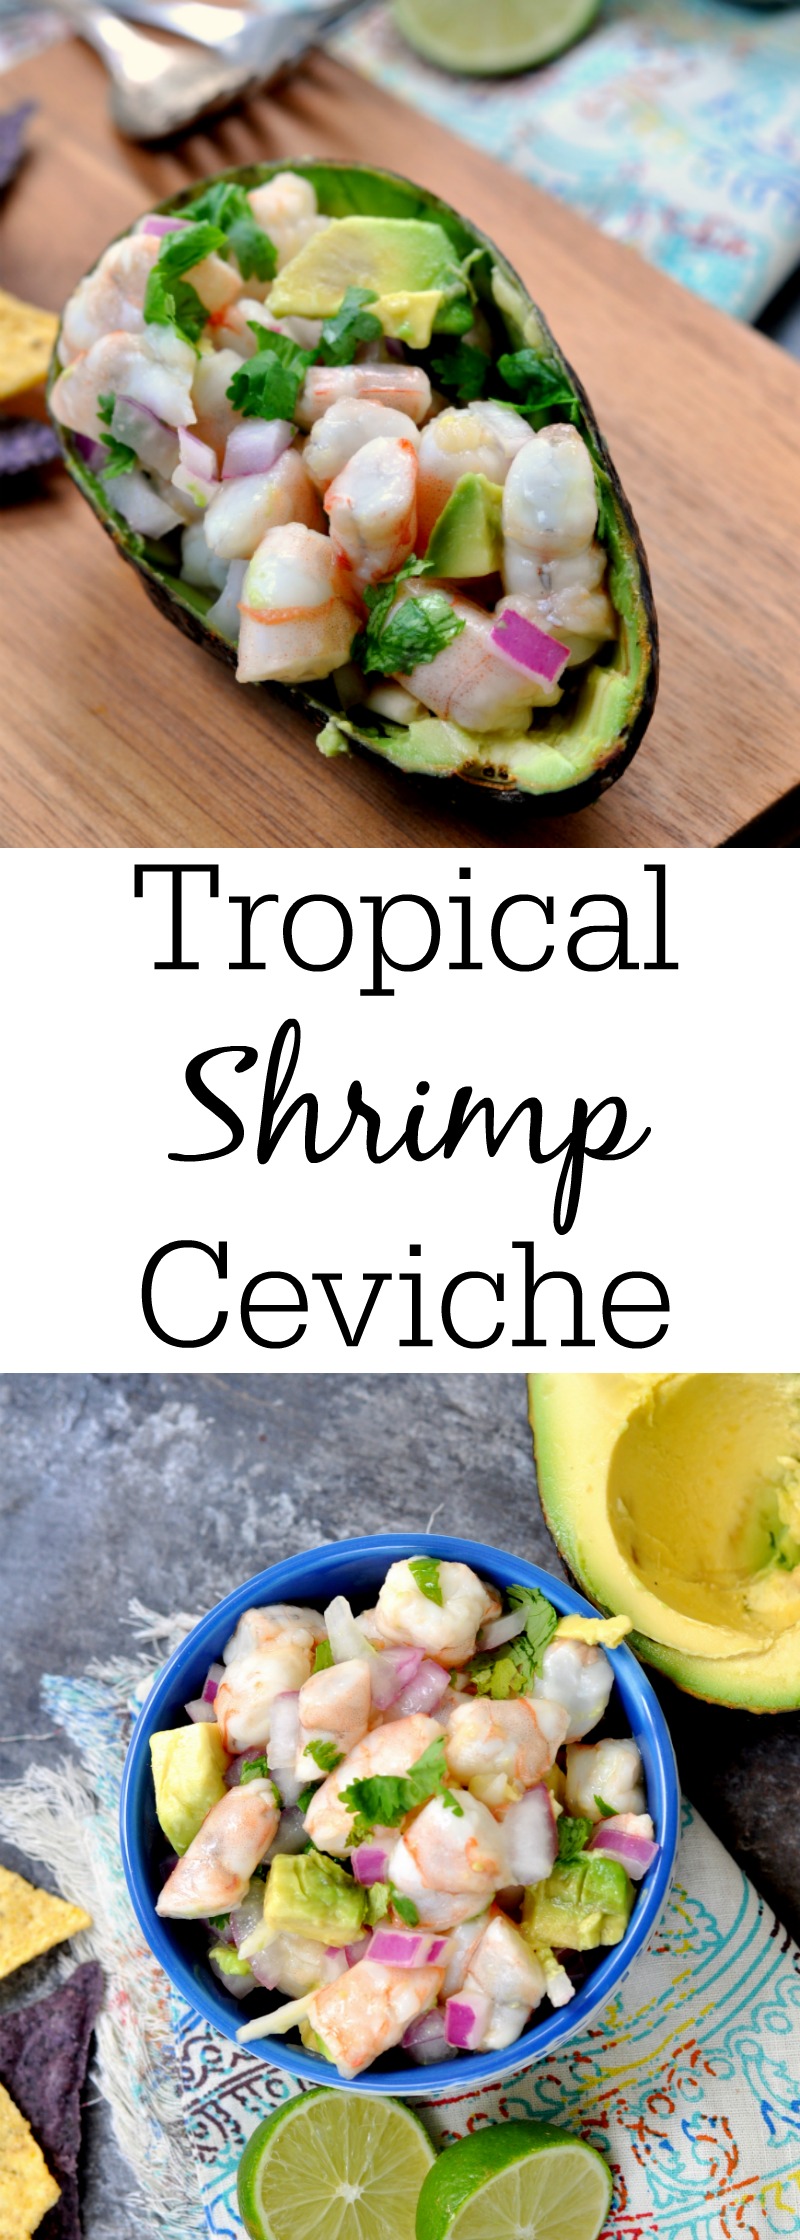 Tropical Shrimp Ceviche